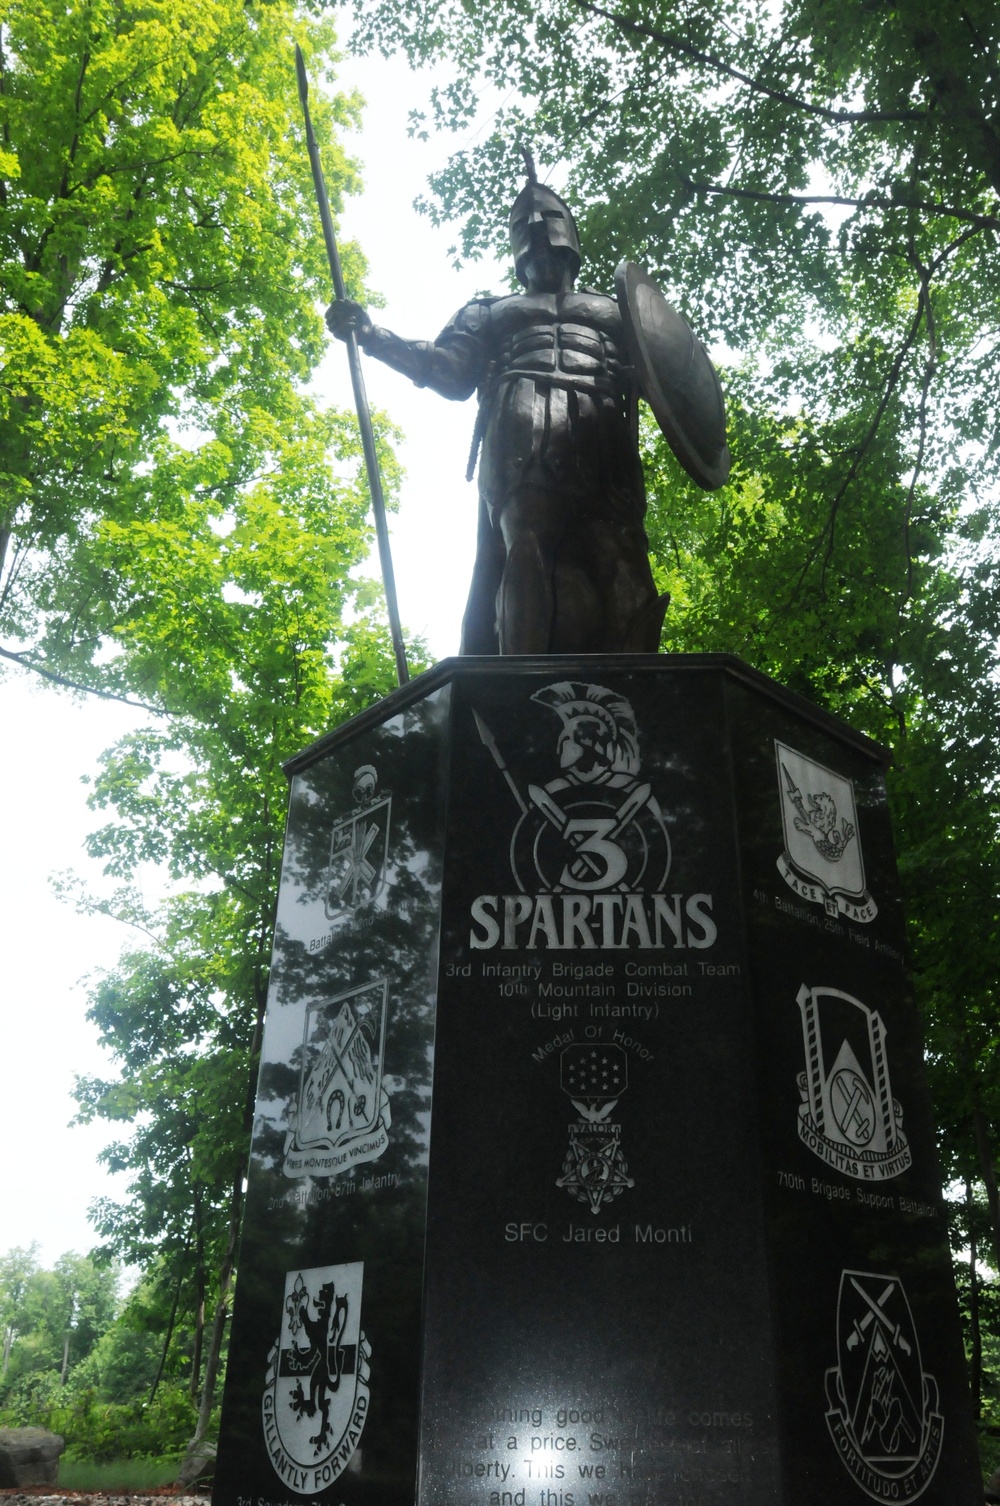 3rd Brigade Combat Team, 10th Mountain Division Spartan Memorial